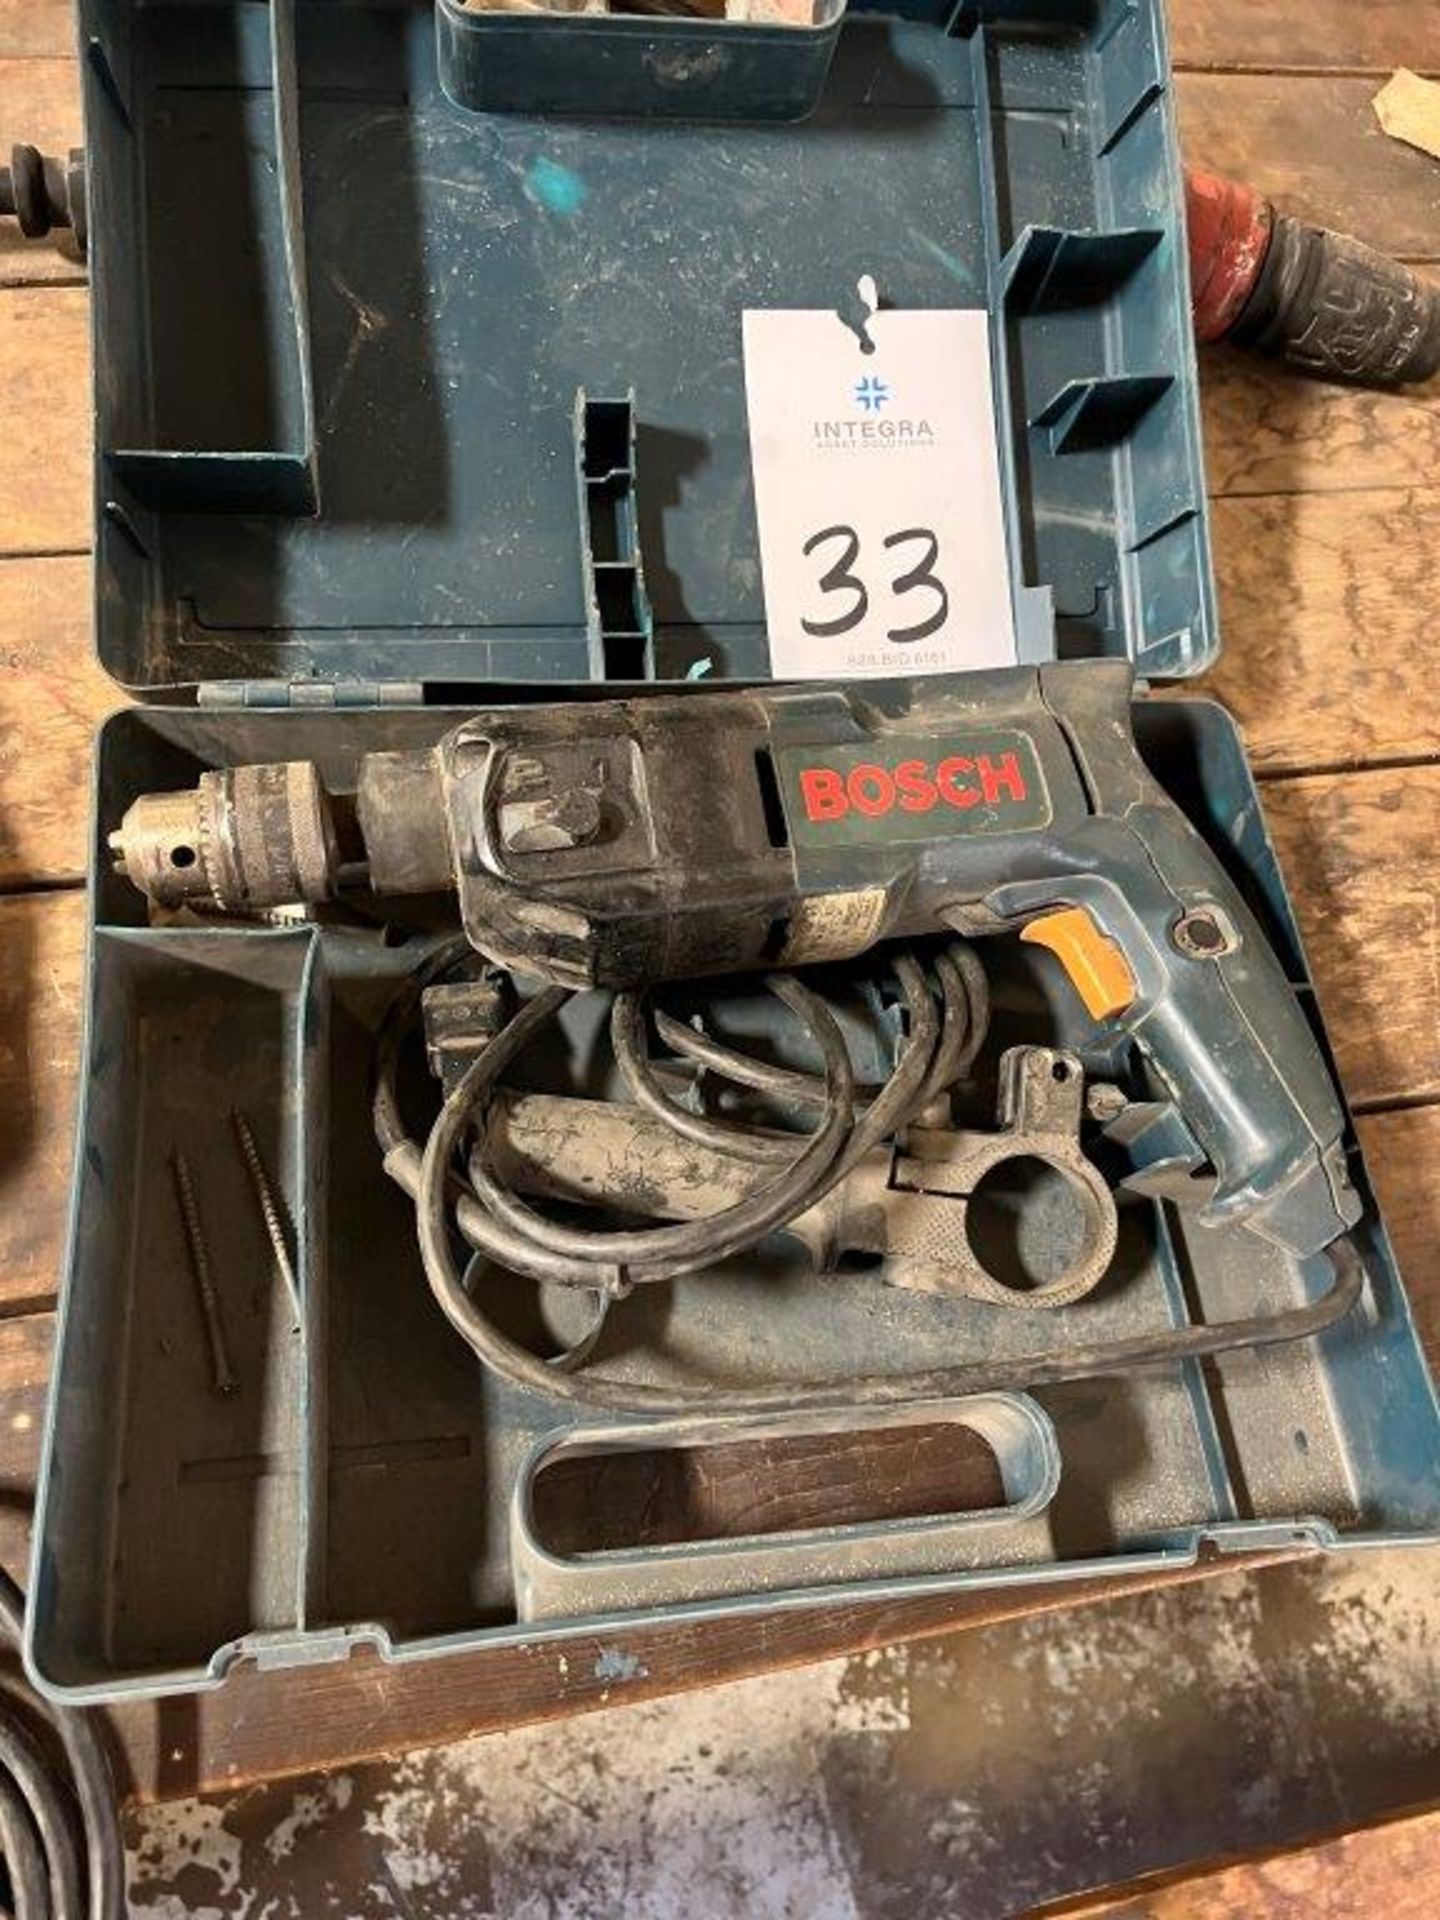 Bosch 0601194639 Electric Hammer Drill